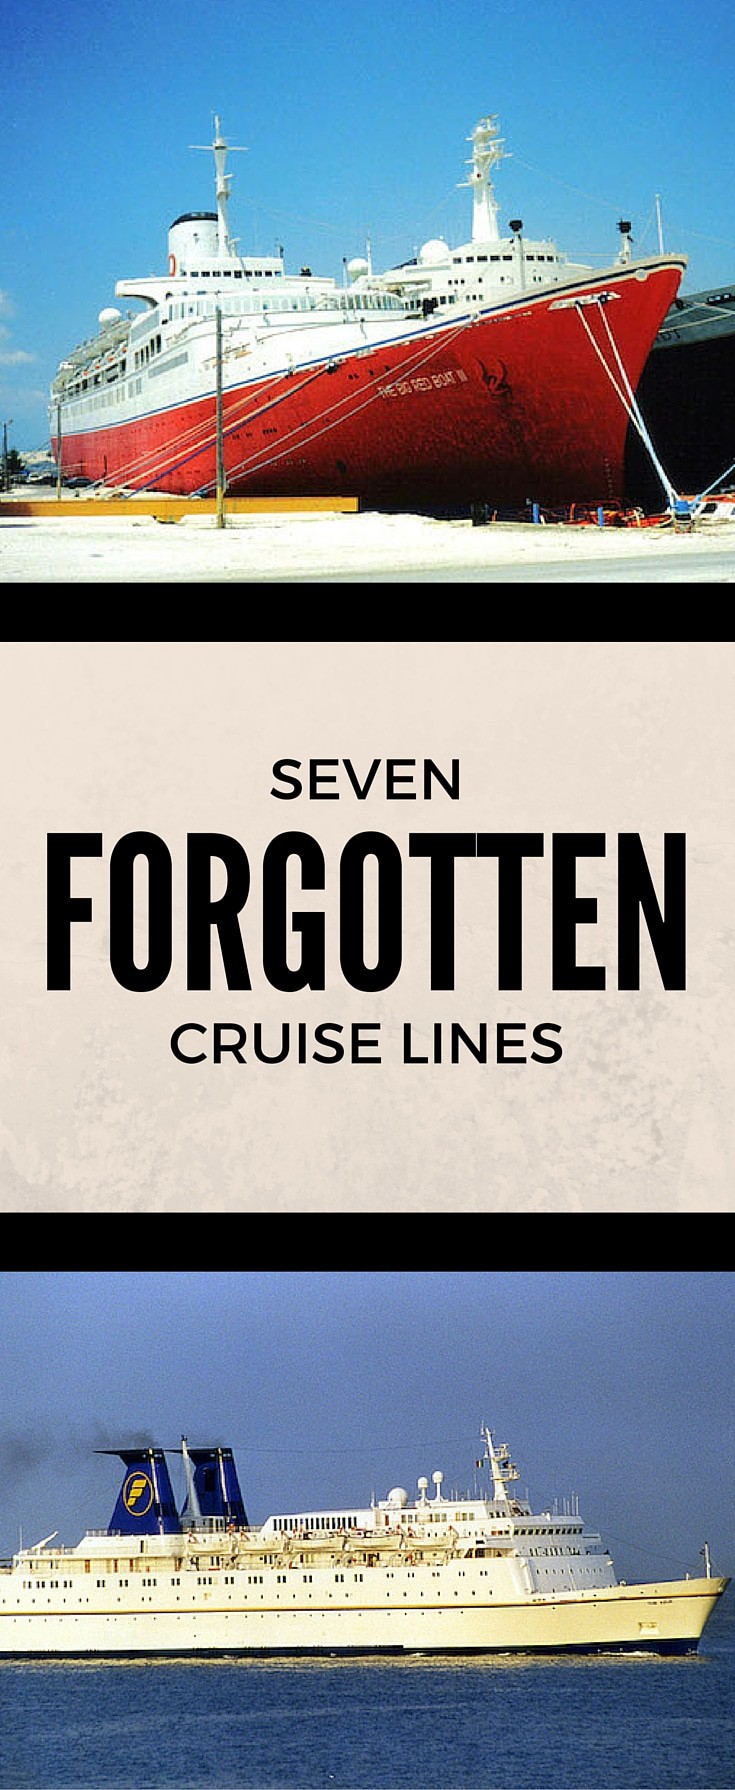 #cruise #history #forgotten #cruising #vacation #travel #cruiseline 